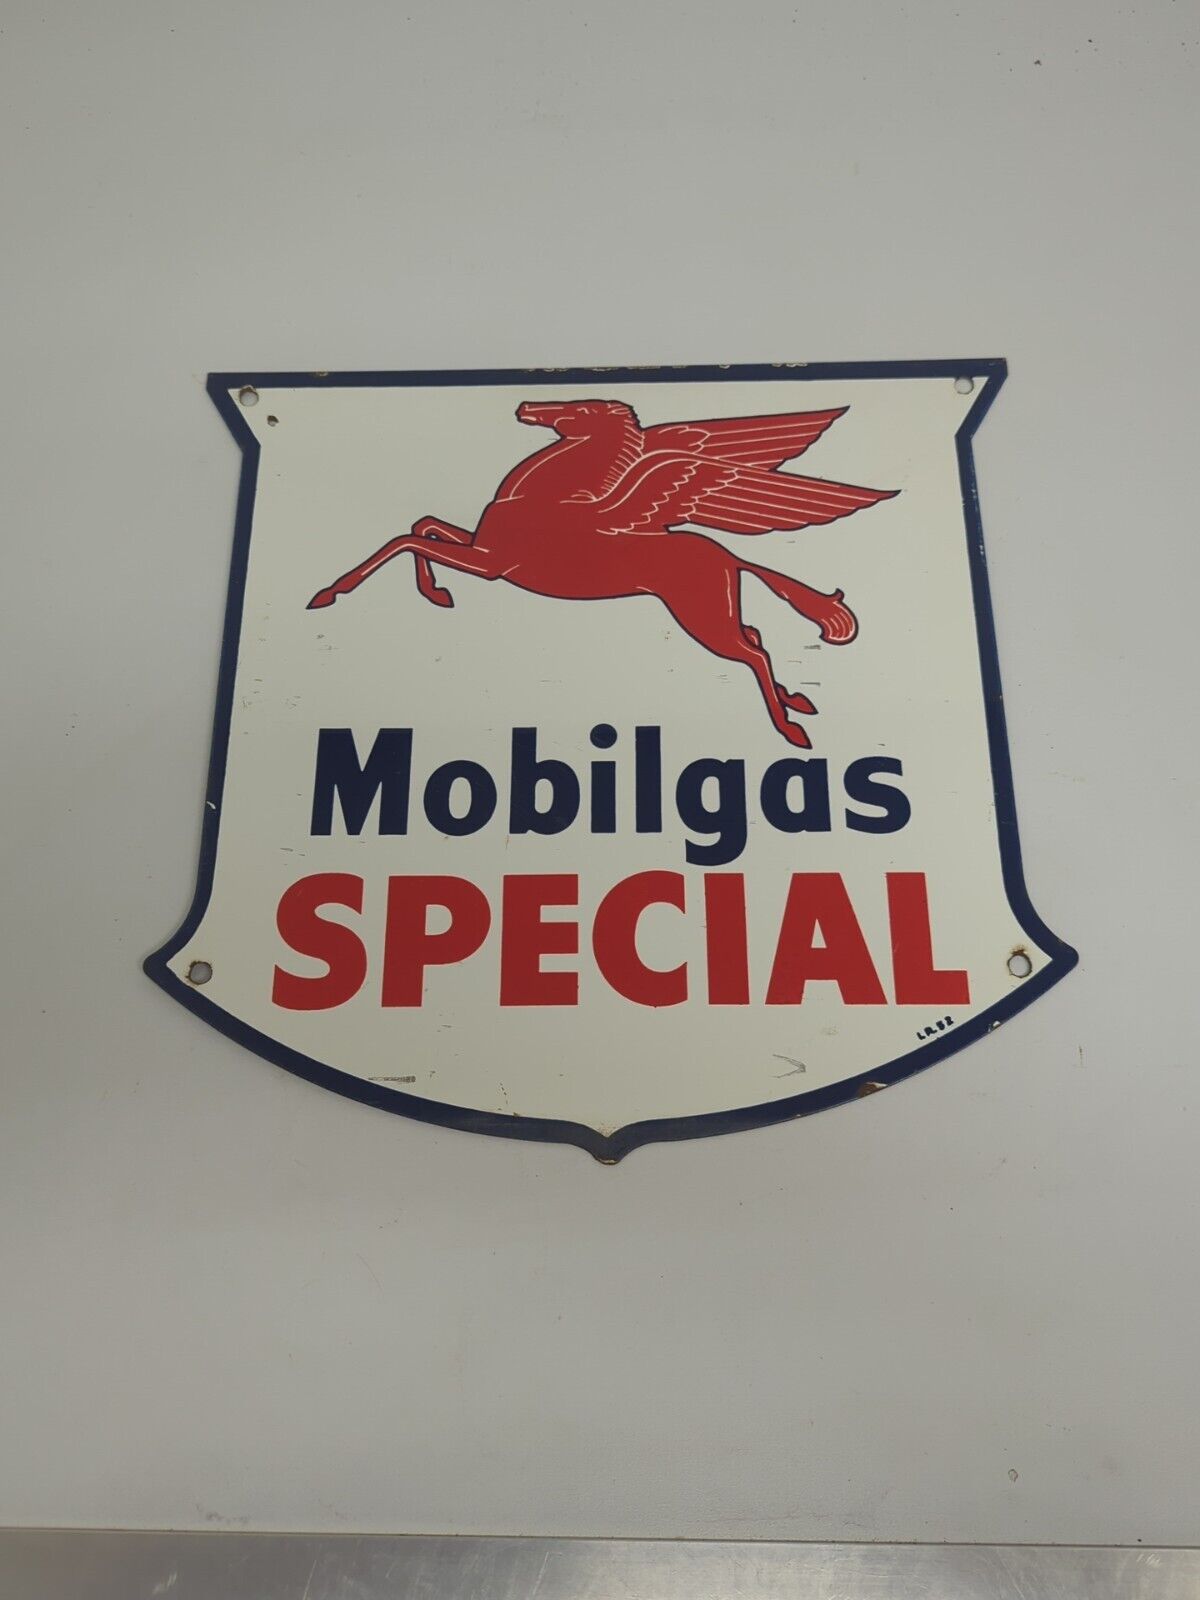 I.R 52 Original Mobilgas Special Porcelain Gas Pump Plate Sign Mobil Oil Station